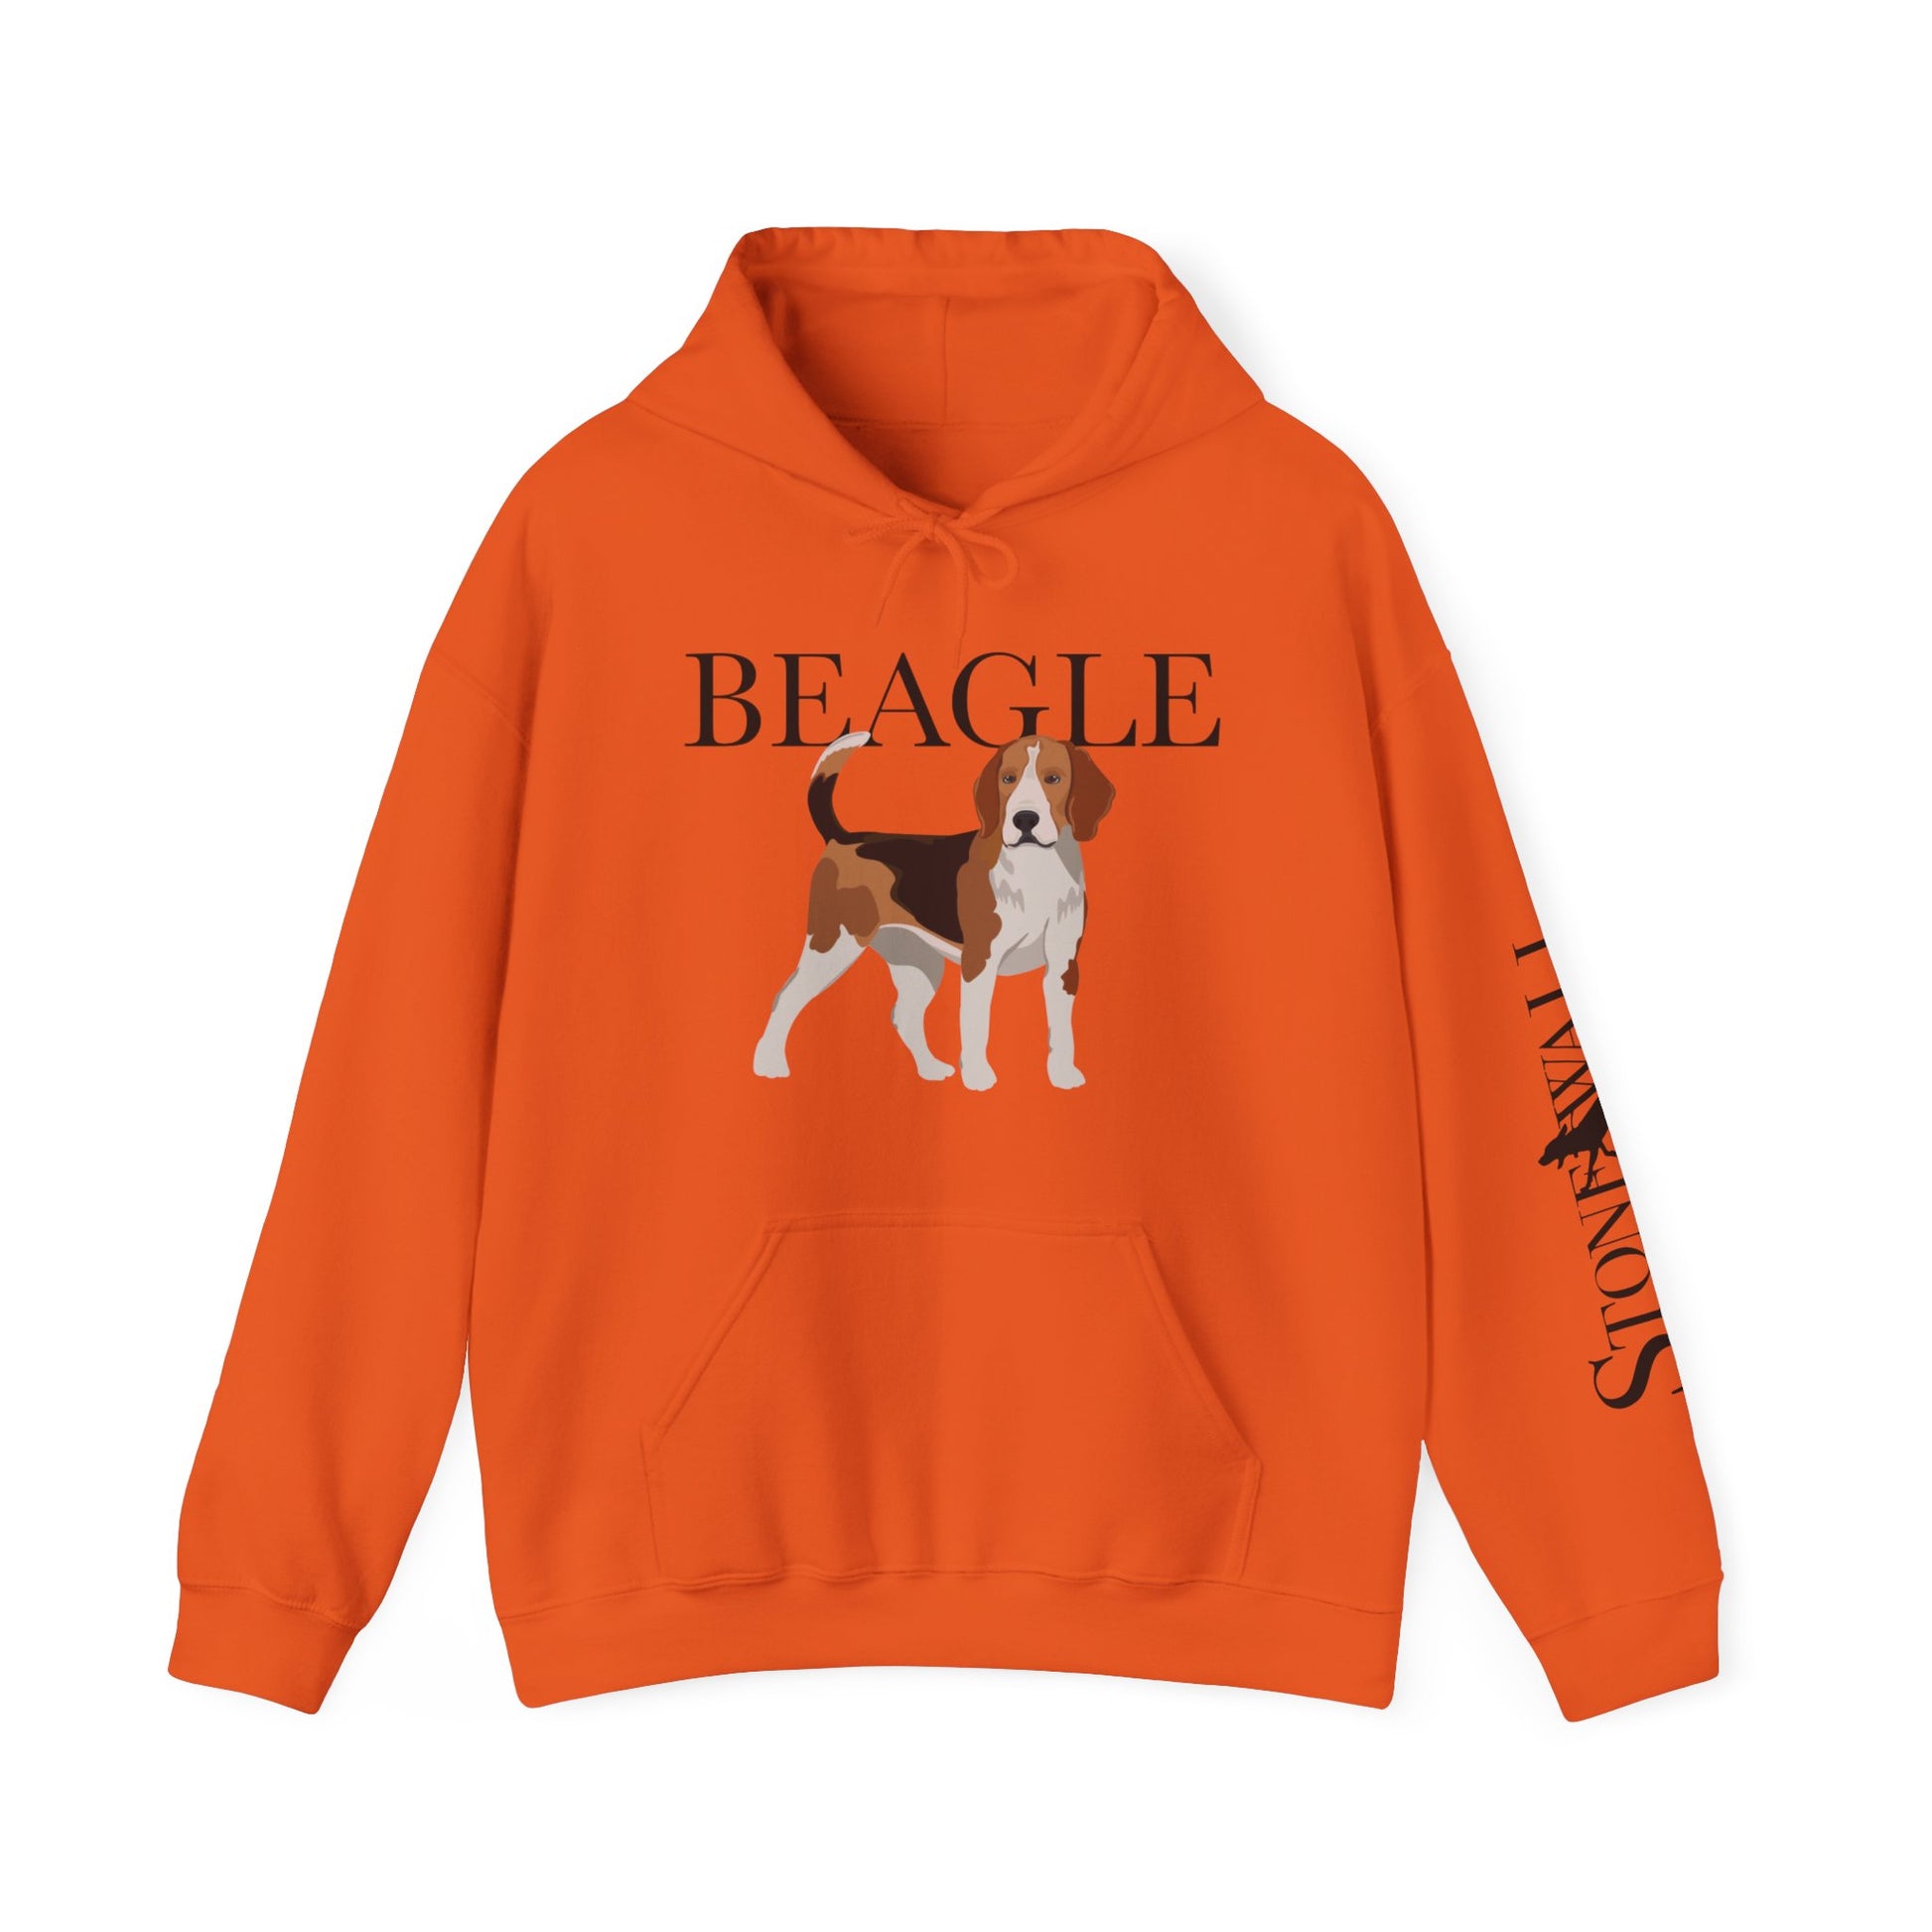 Beagle hoodie